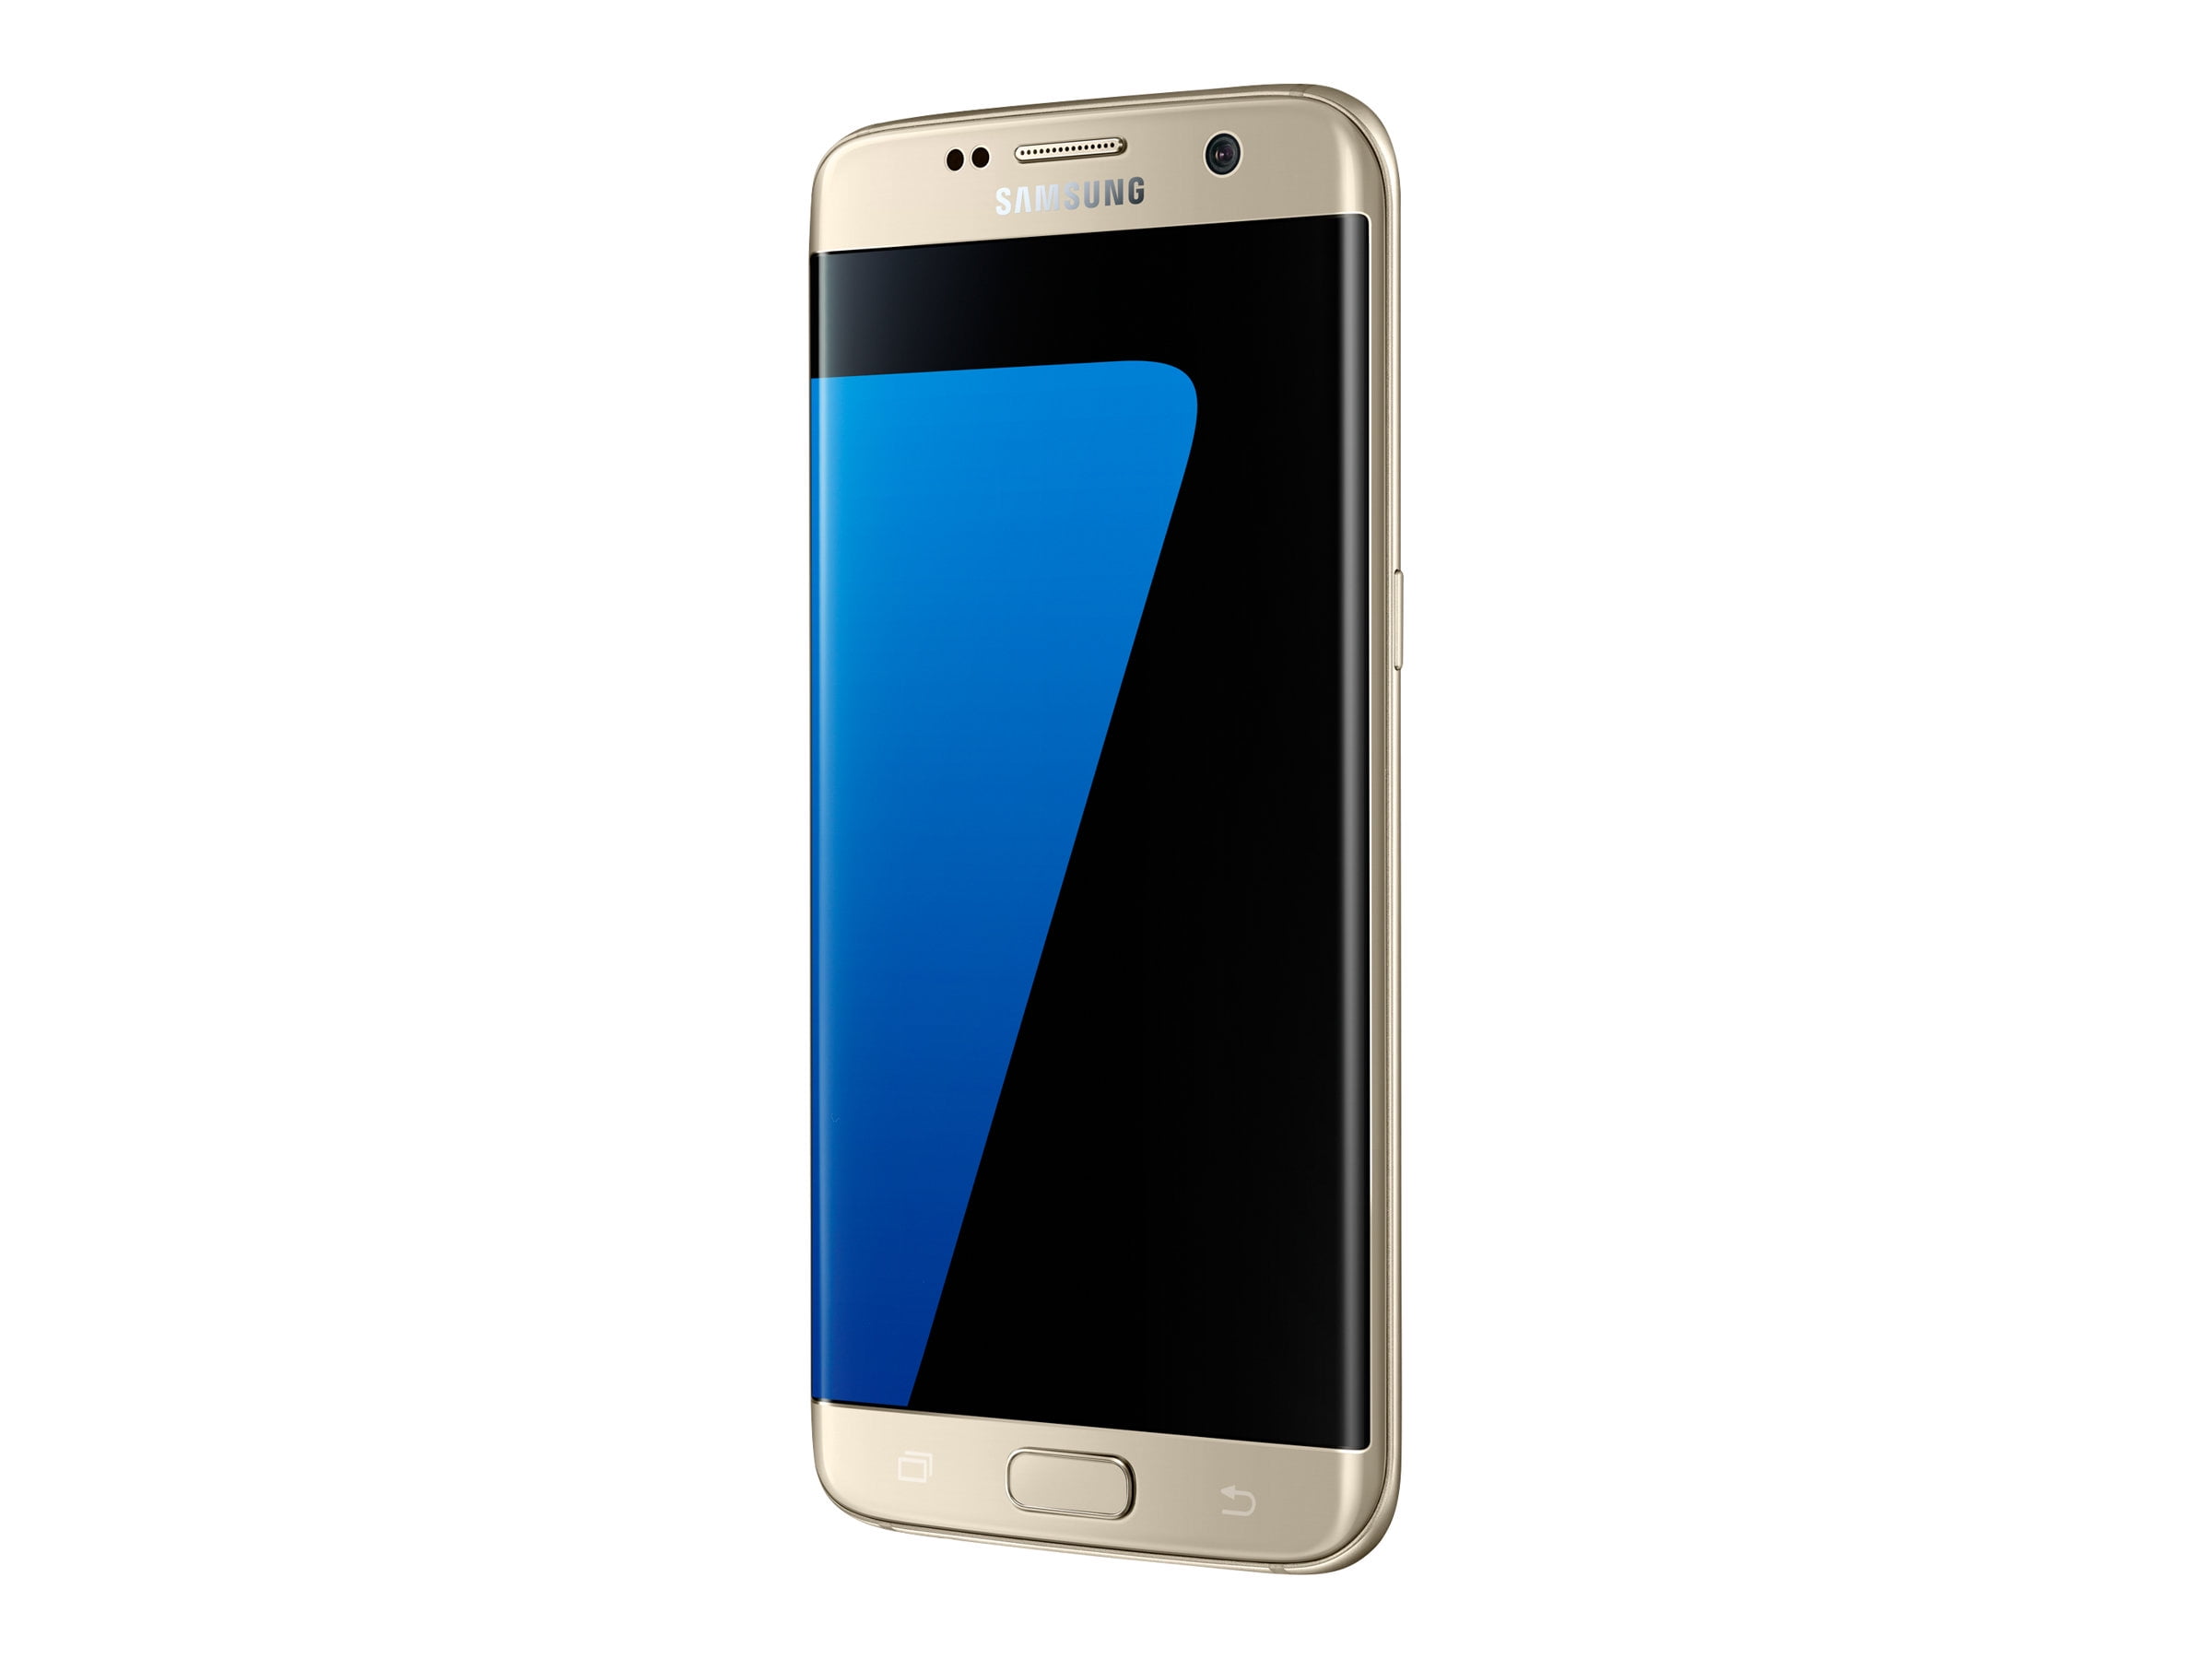 Overgave Macadam Bad Samsung Galaxy S7 G930A 32GB AT&T Unlocked 4G LTE Quad-Core Phone w/ 12MP  Camera - Rose Gold - Walmart.com